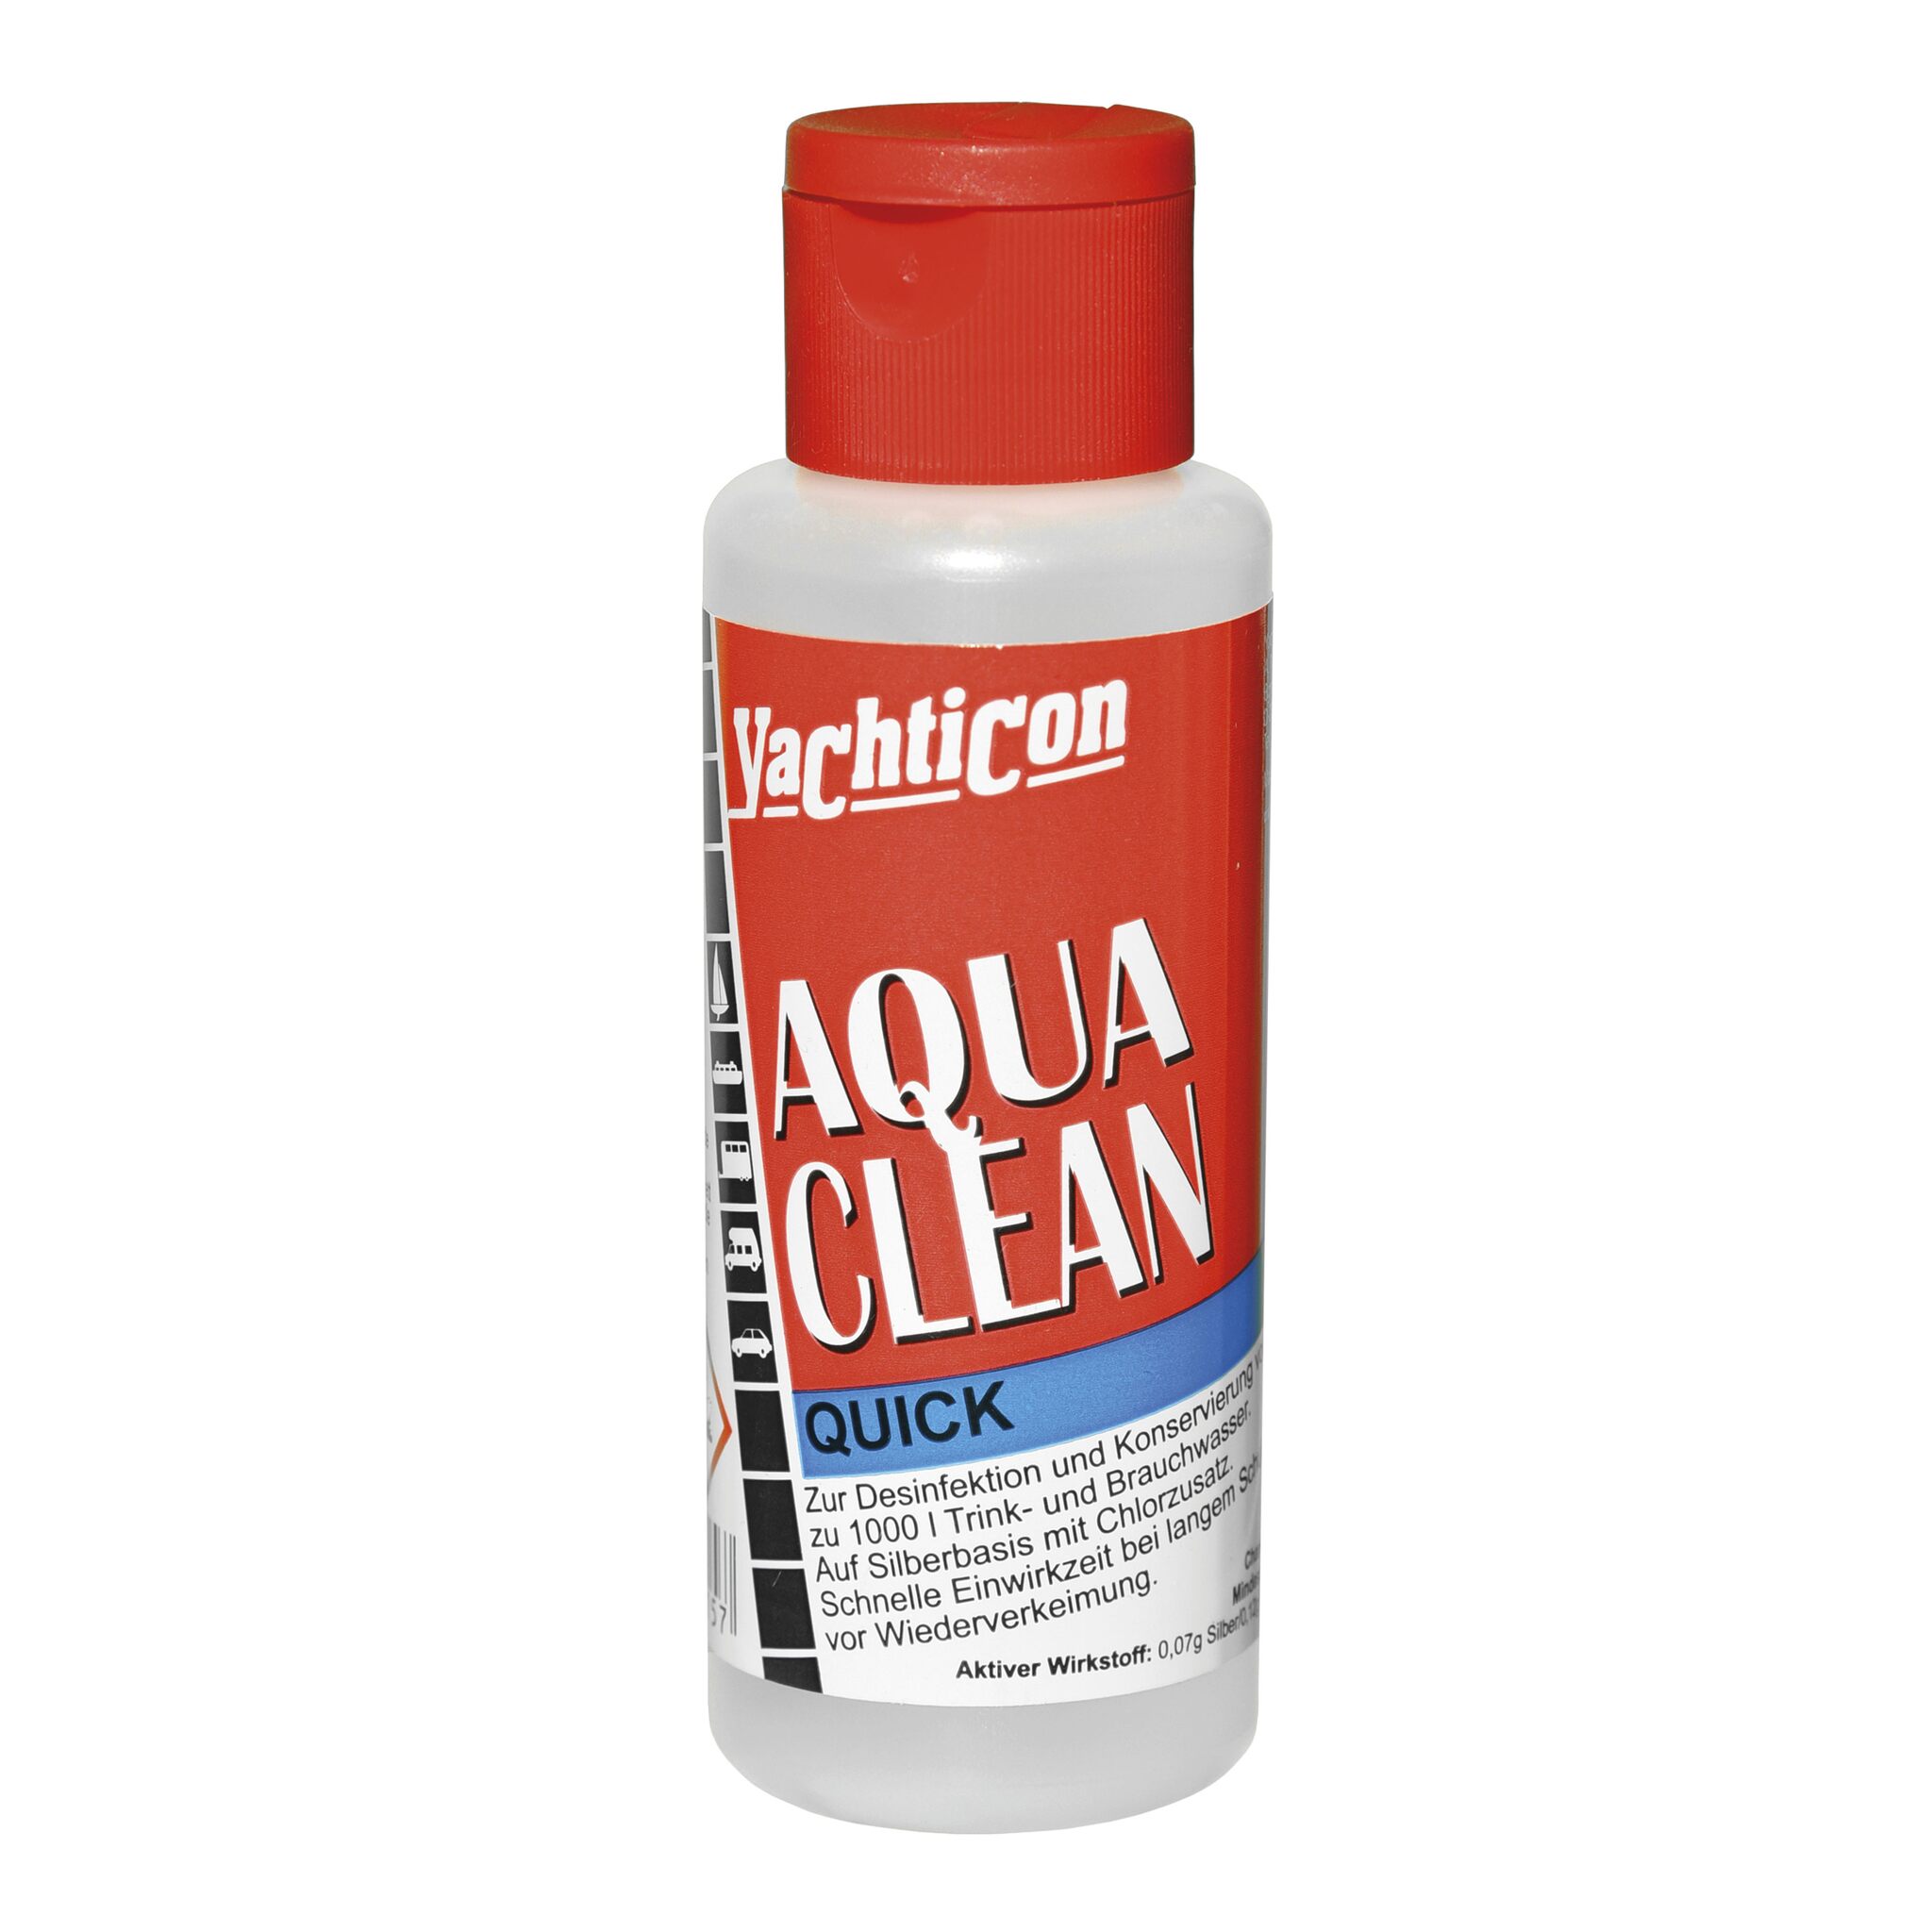 Yachticon Aqua Clean Quick flüssig